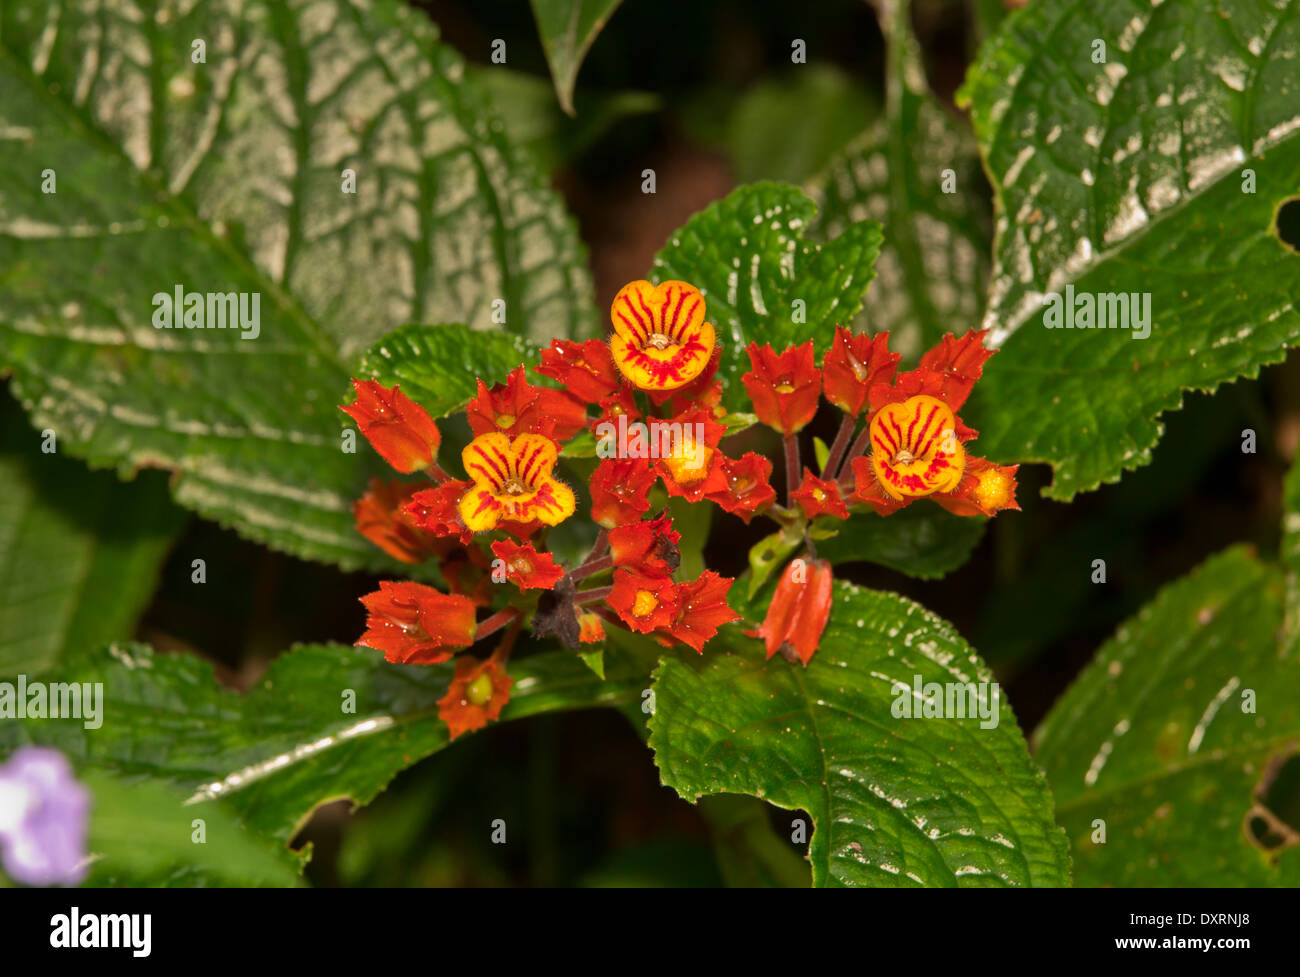 Copper Leaf or Sunset Bells, Chrysothemis pulchella. Trinidad. Gesneriaceae. Stock Photo